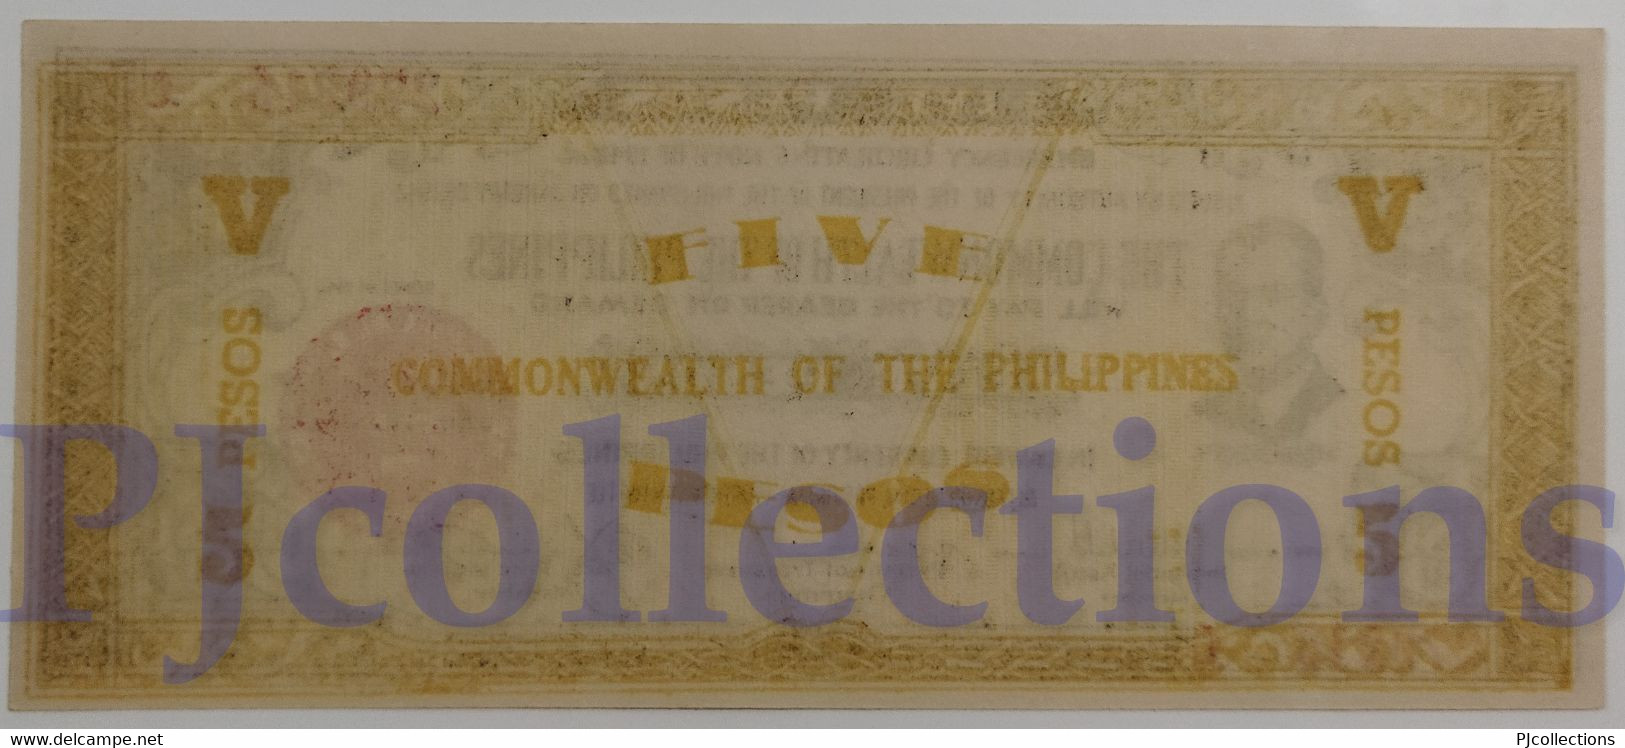 PHILIPPINES 5 PESOS 1942 PICK S648b UNC EMERGENCY BANKNOTE - Philippines